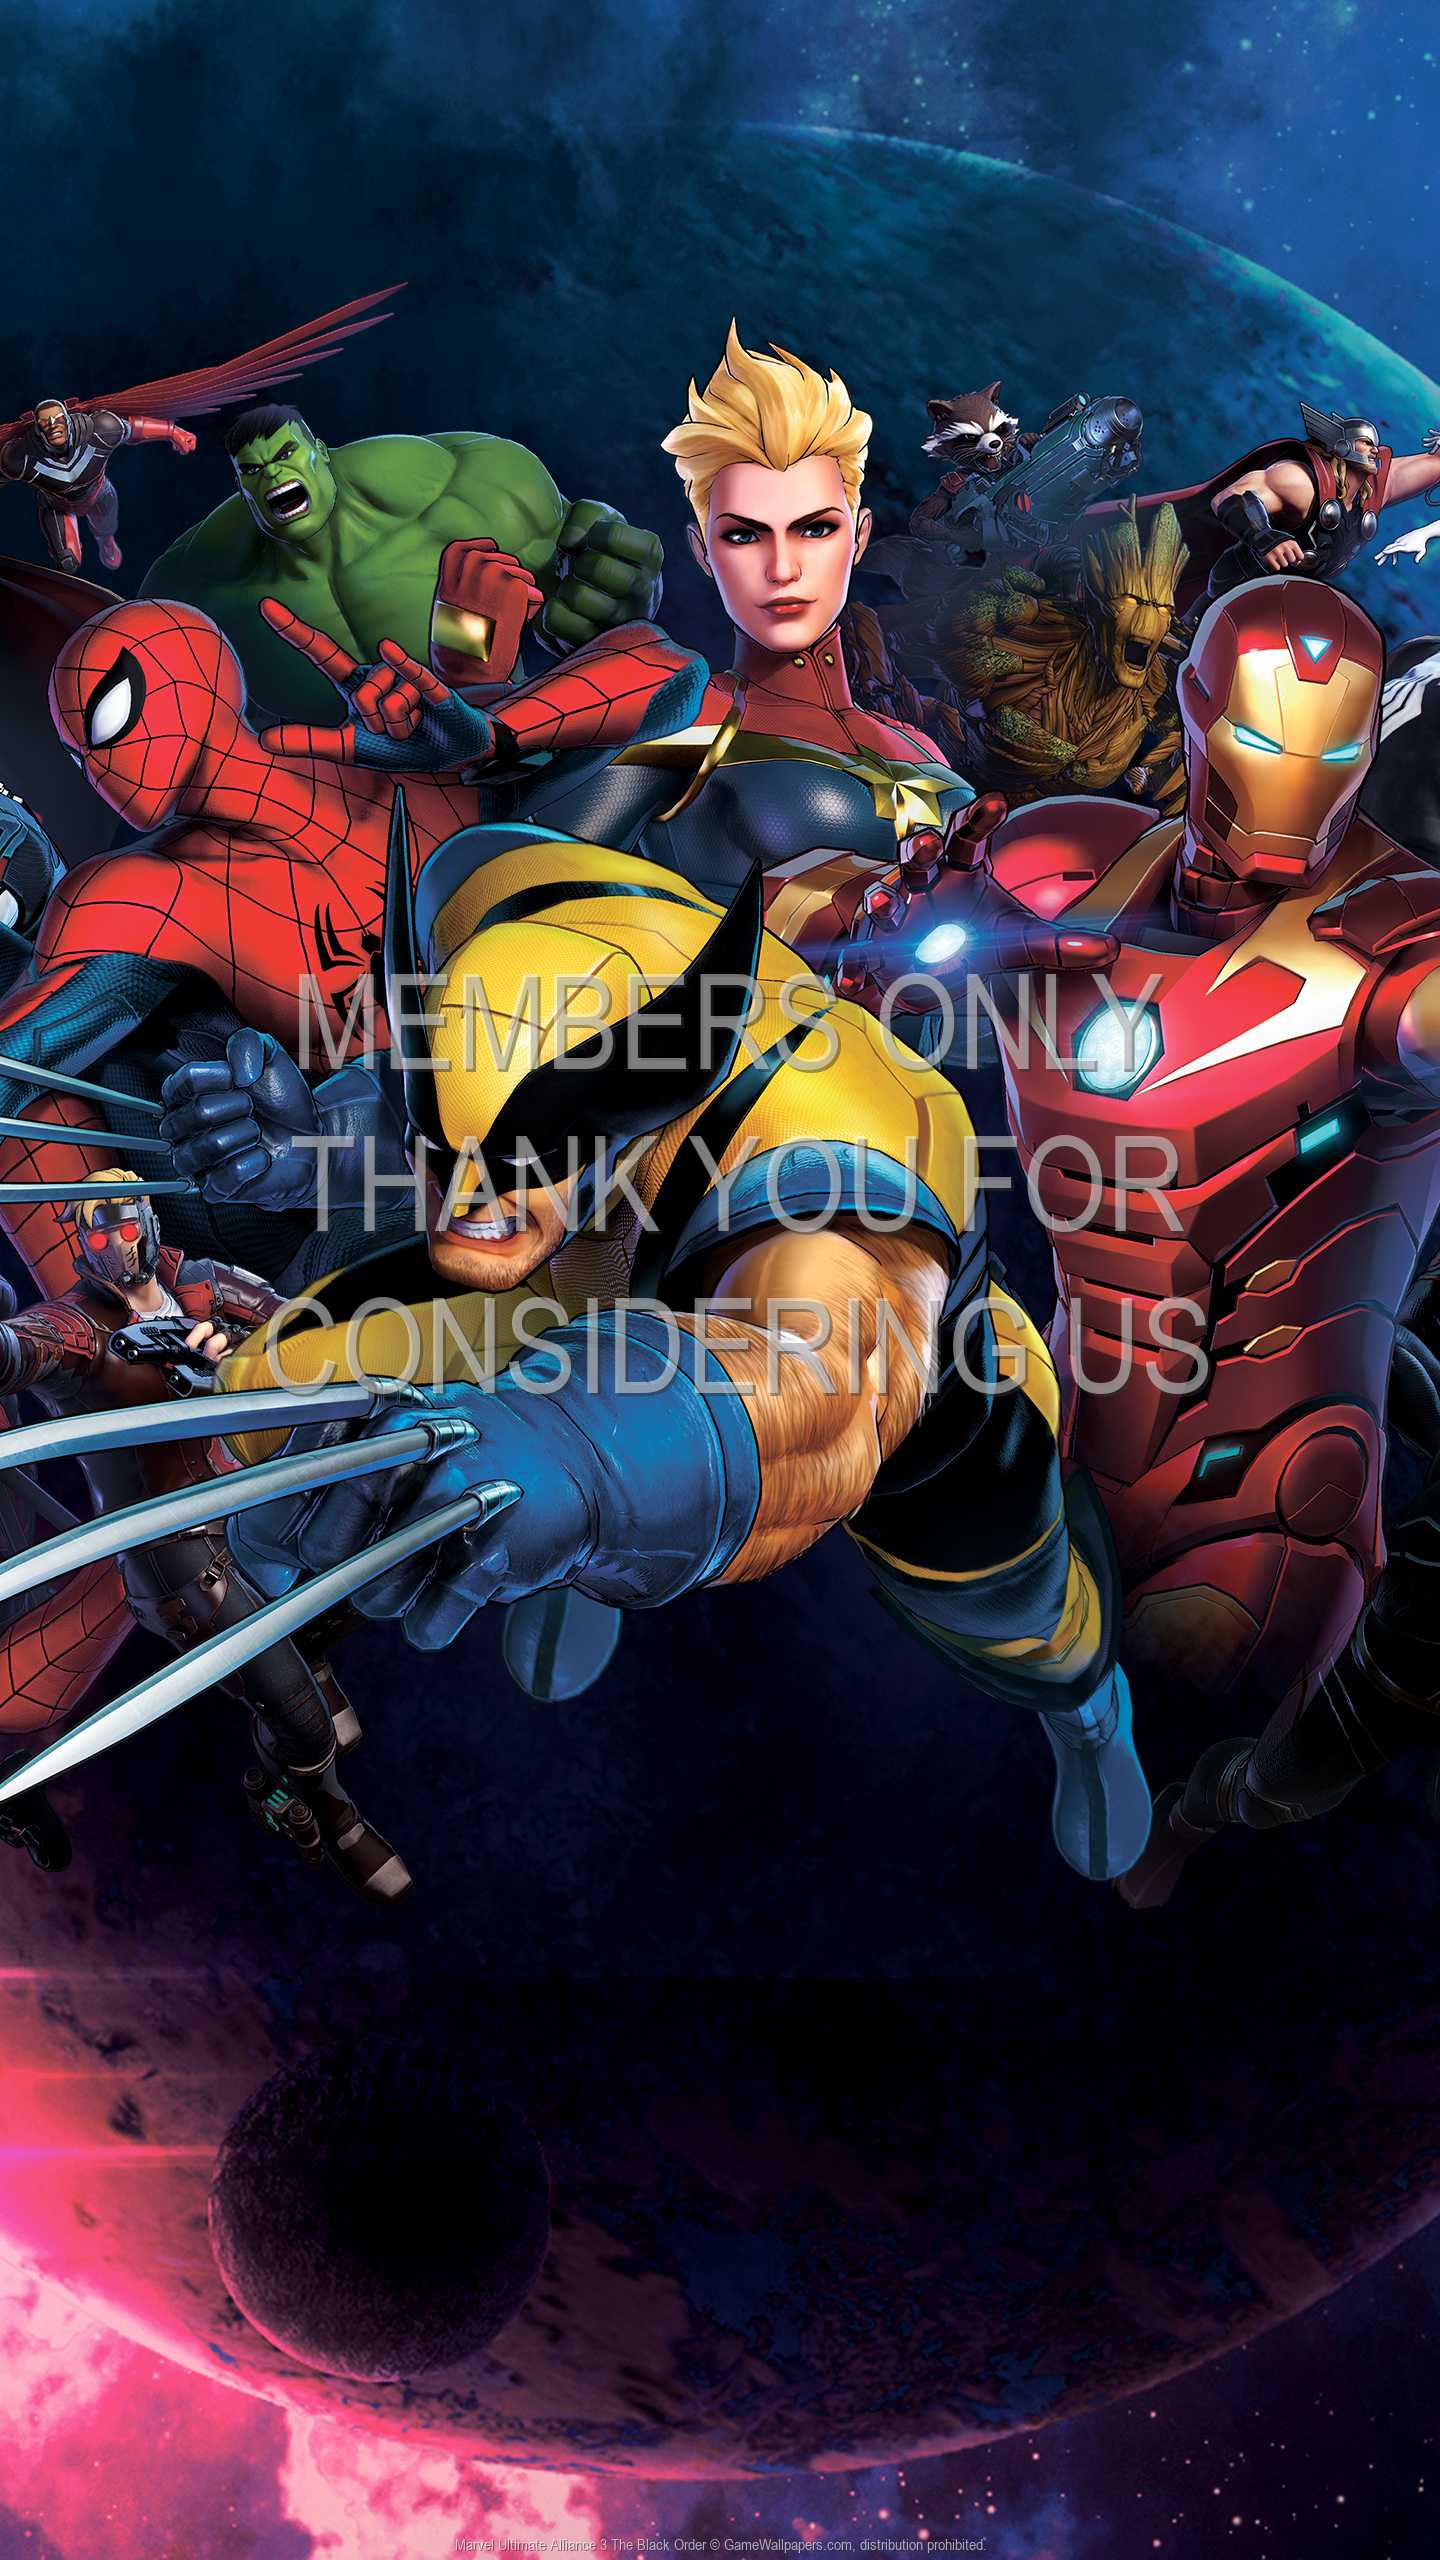 Marvel Ultimate Alliance 3: The Black Order 1440p Vertical Mobile wallpaper or background 01